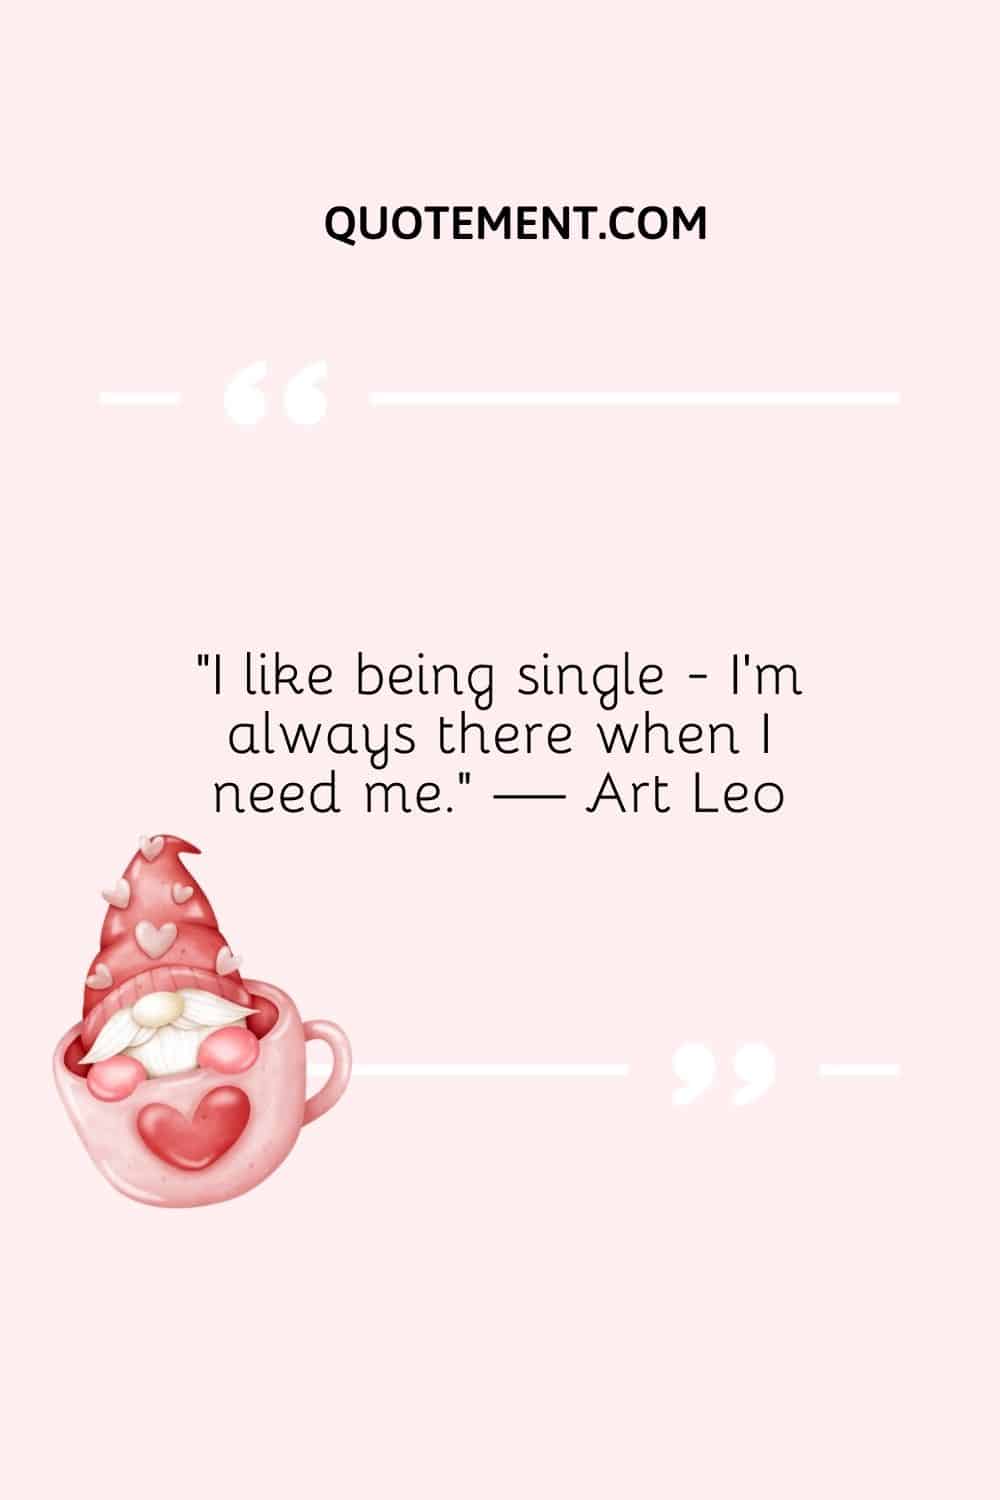 “I like being single - I’m always there when I need me.” — Art Leo